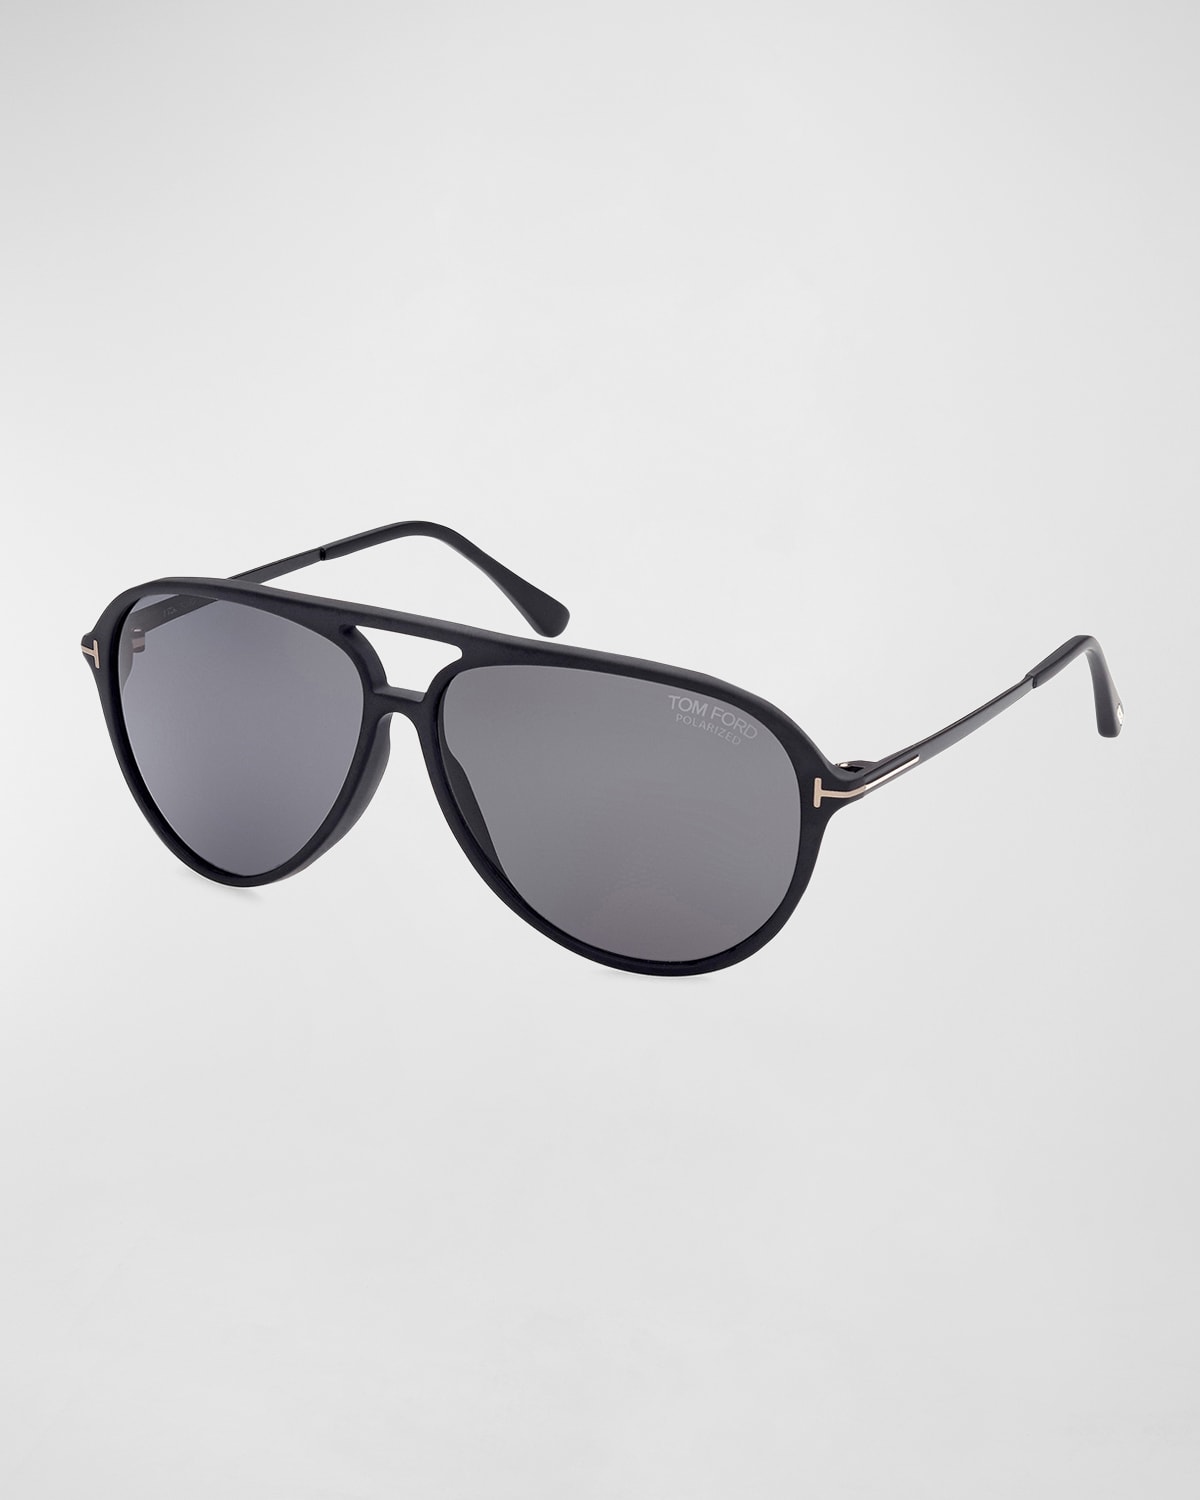 Black Aviator Sunglasses Neiman Marcus 